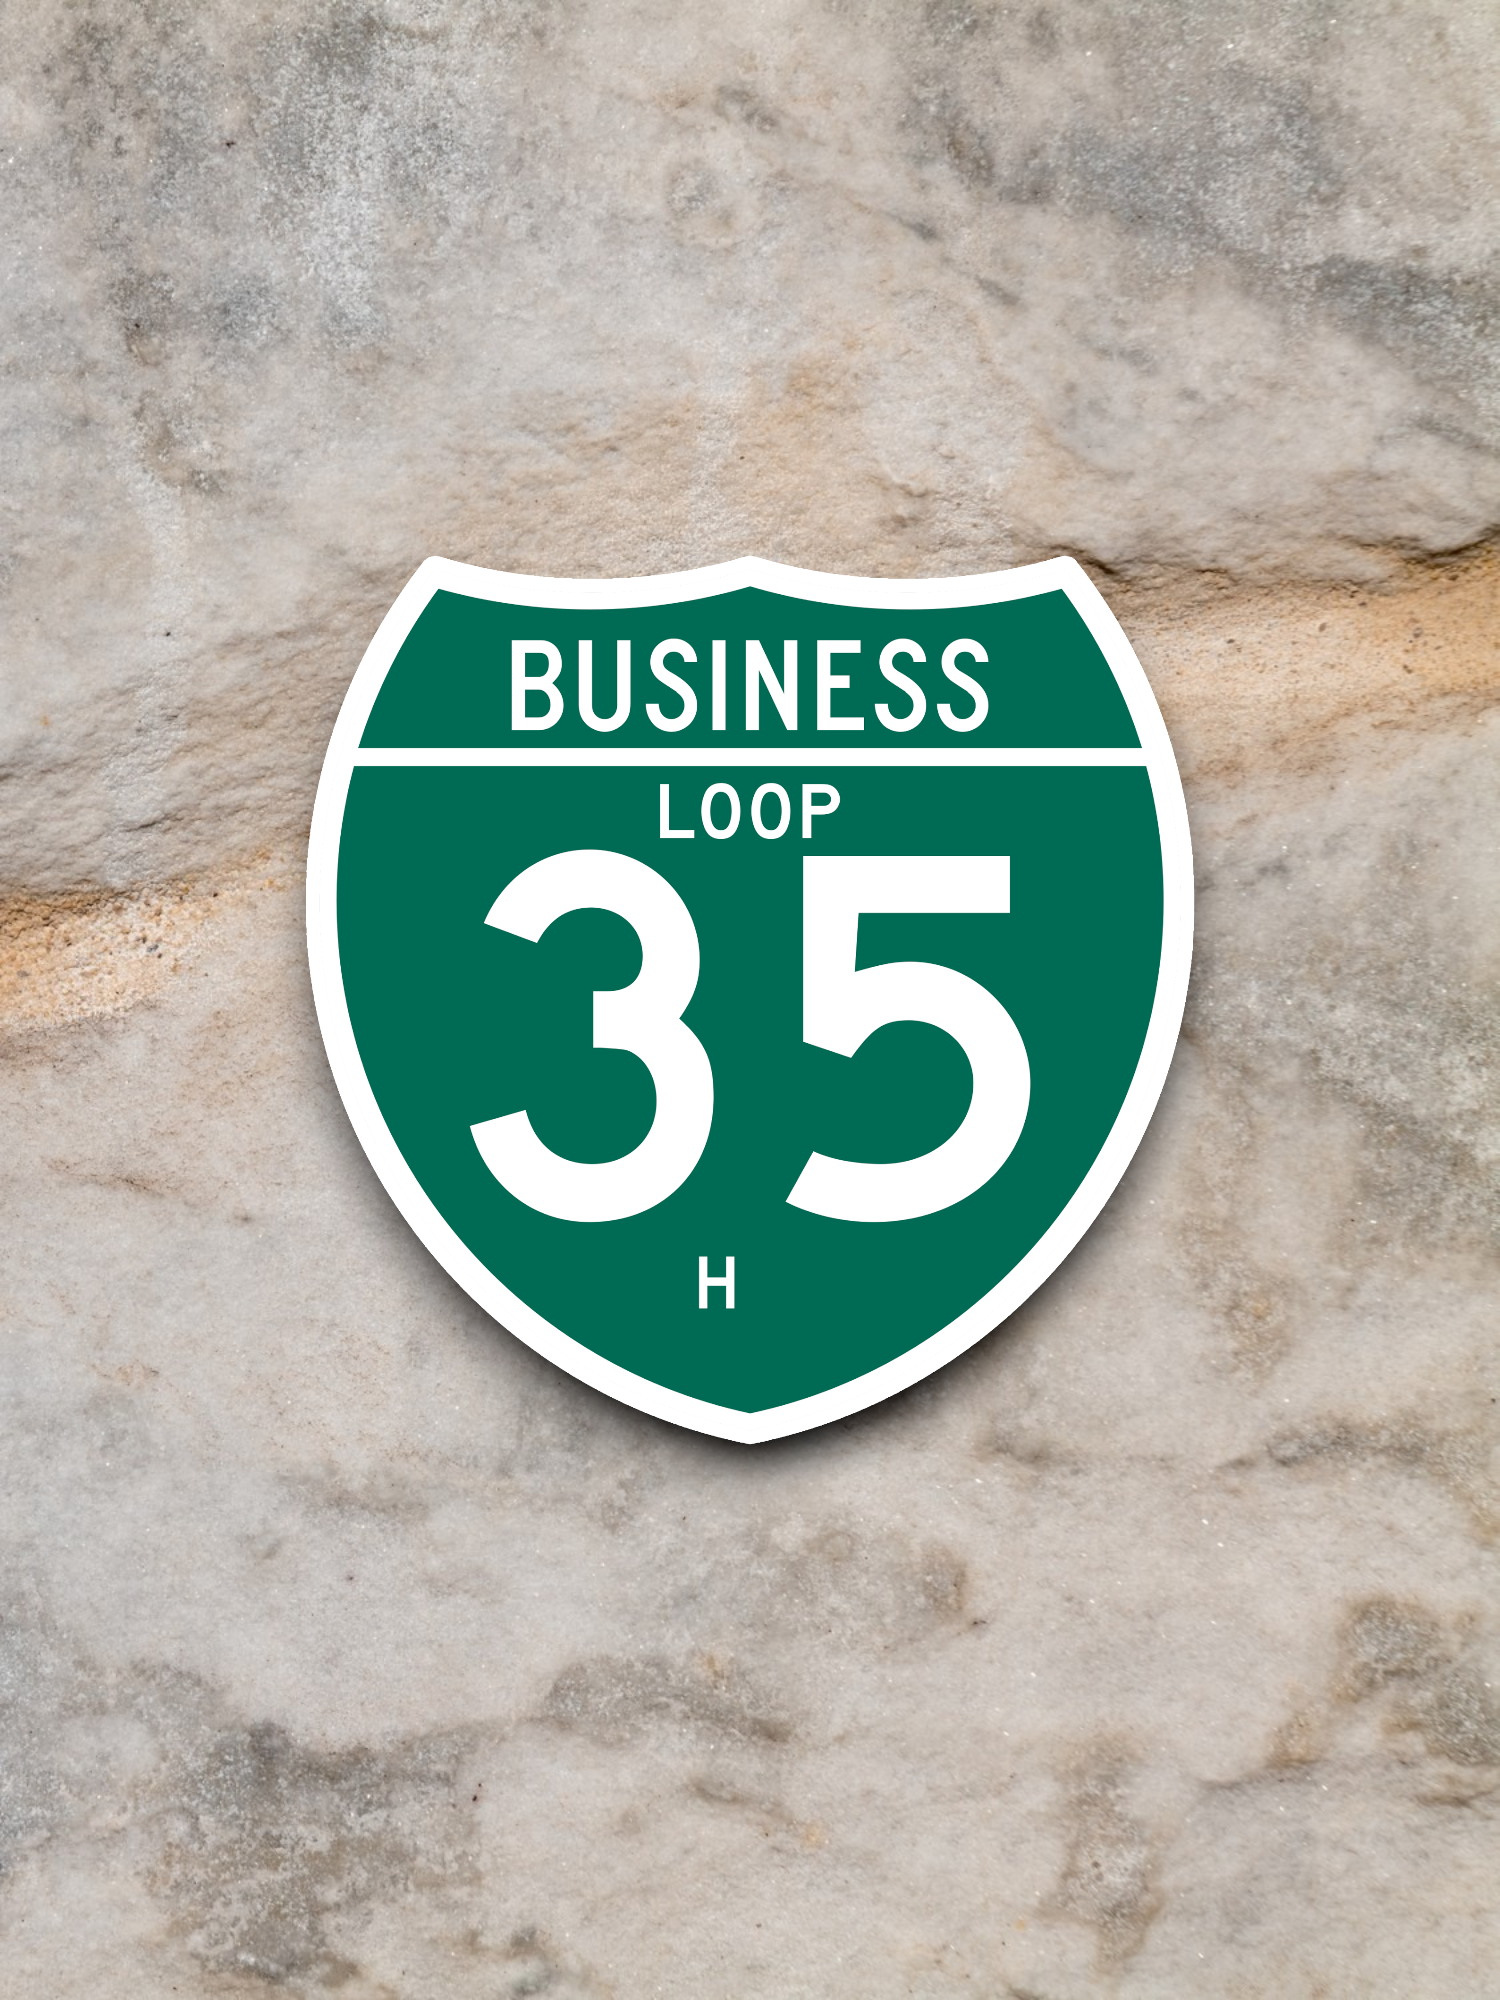 Business Spur Interstate 35-H Texas Texas Road Sign Sticker